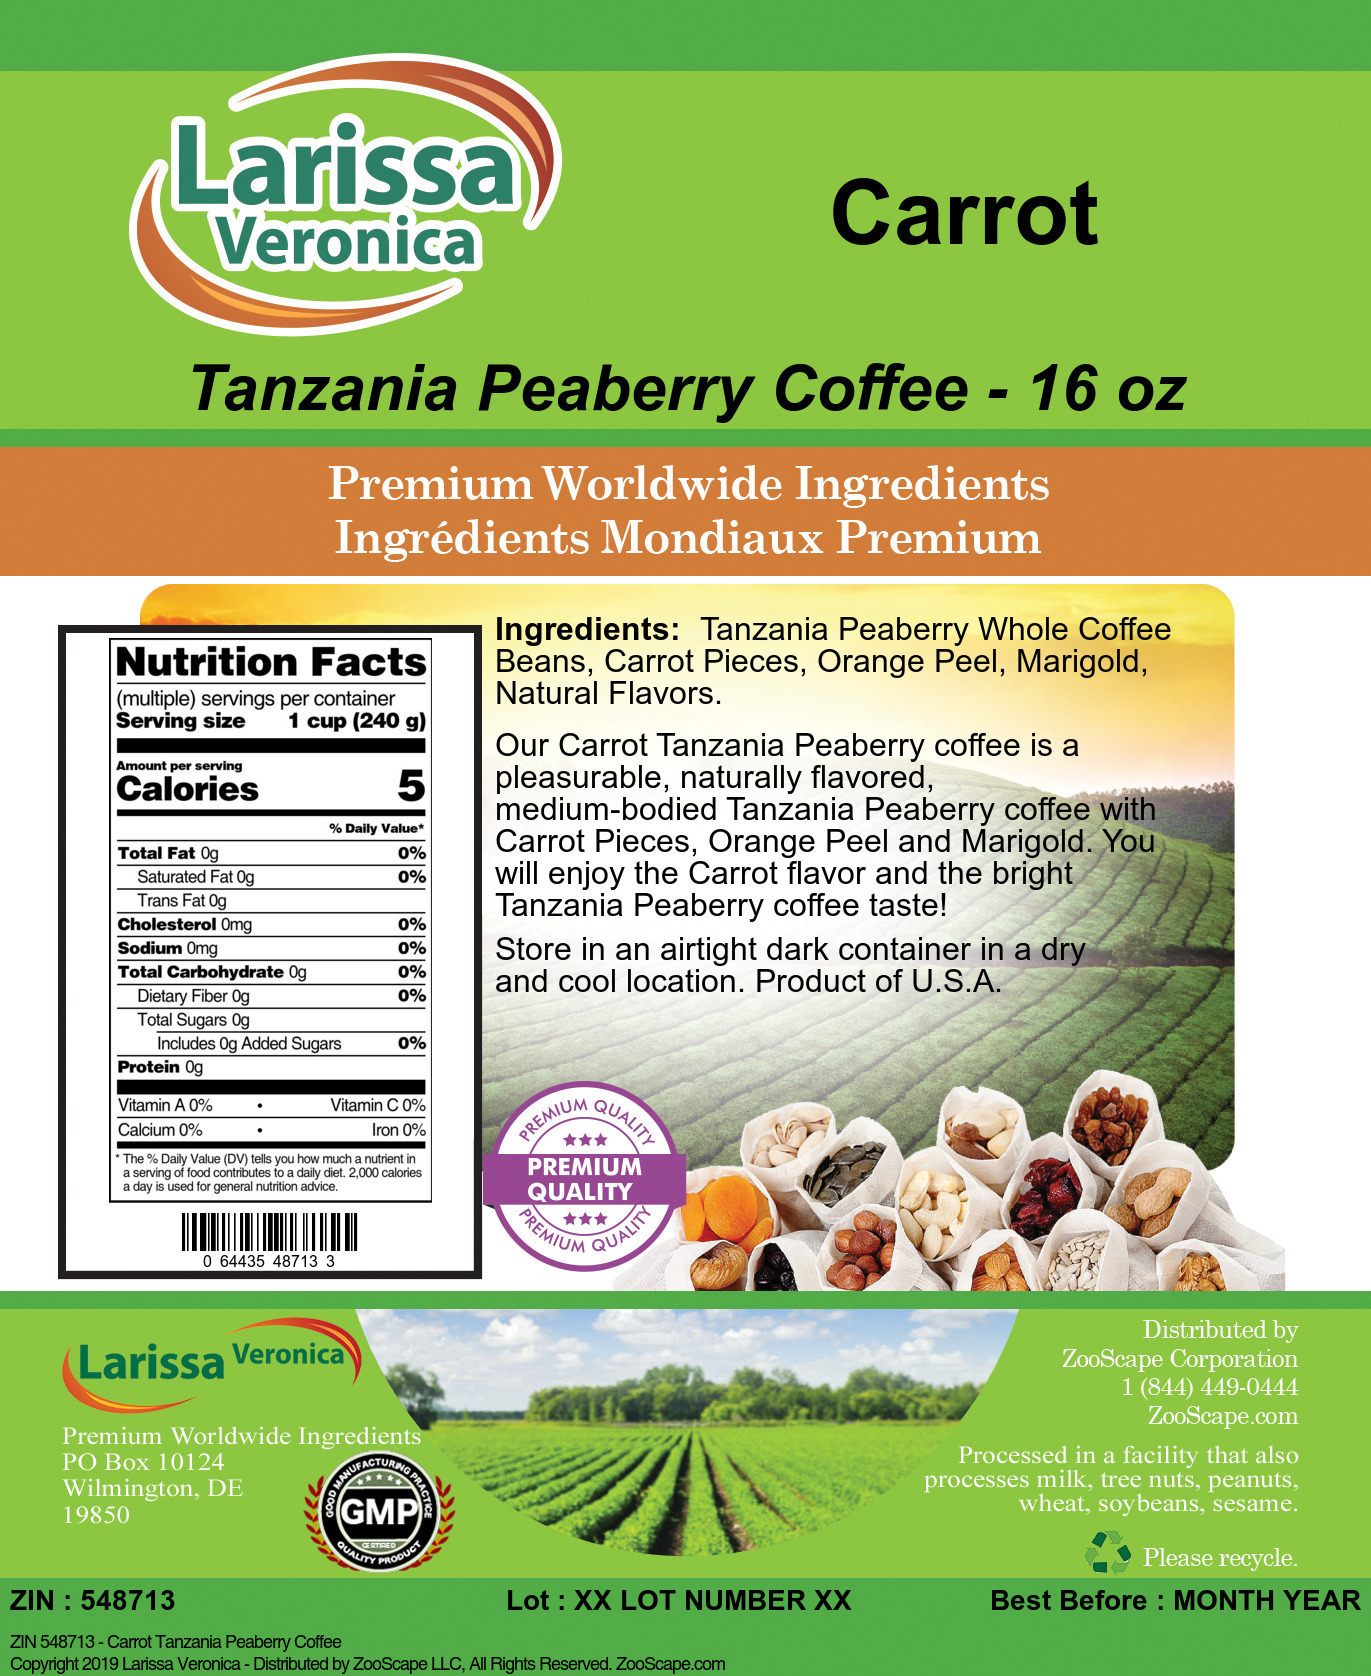 Carrot Tanzania Peaberry Coffee - Label